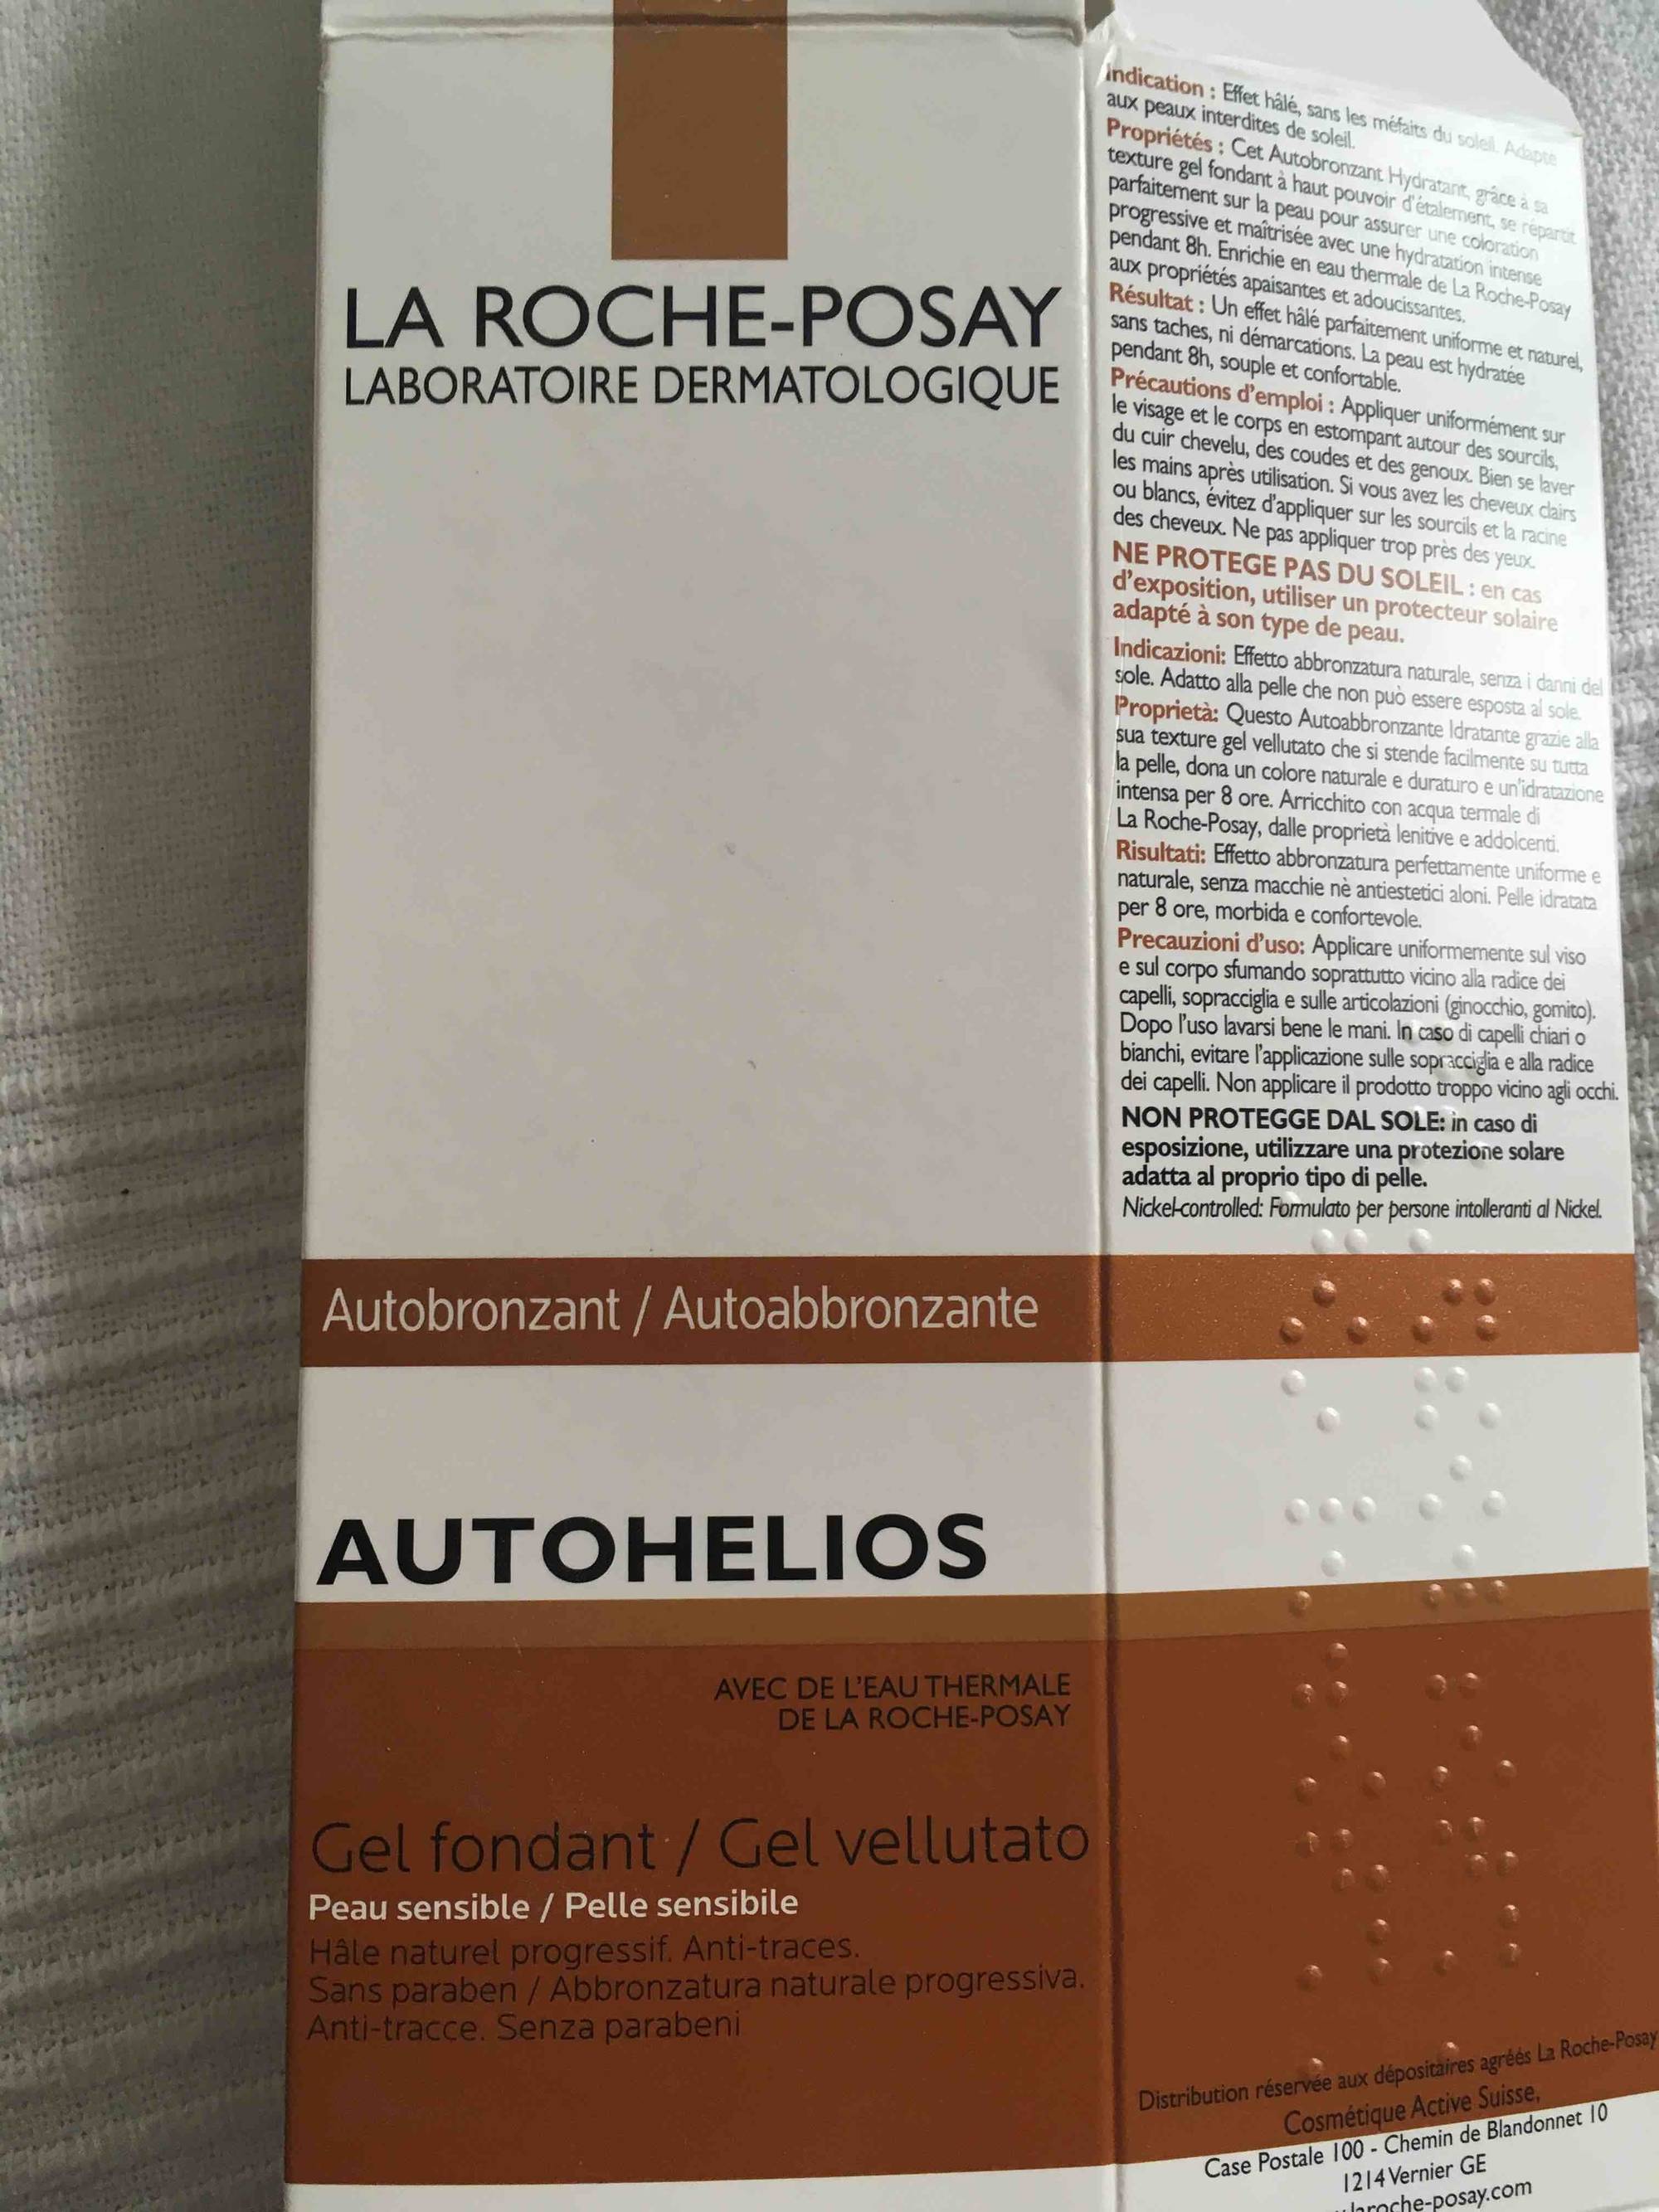 LA ROCHE-POSAY - Autohelios - Gel fondant Autobronzant